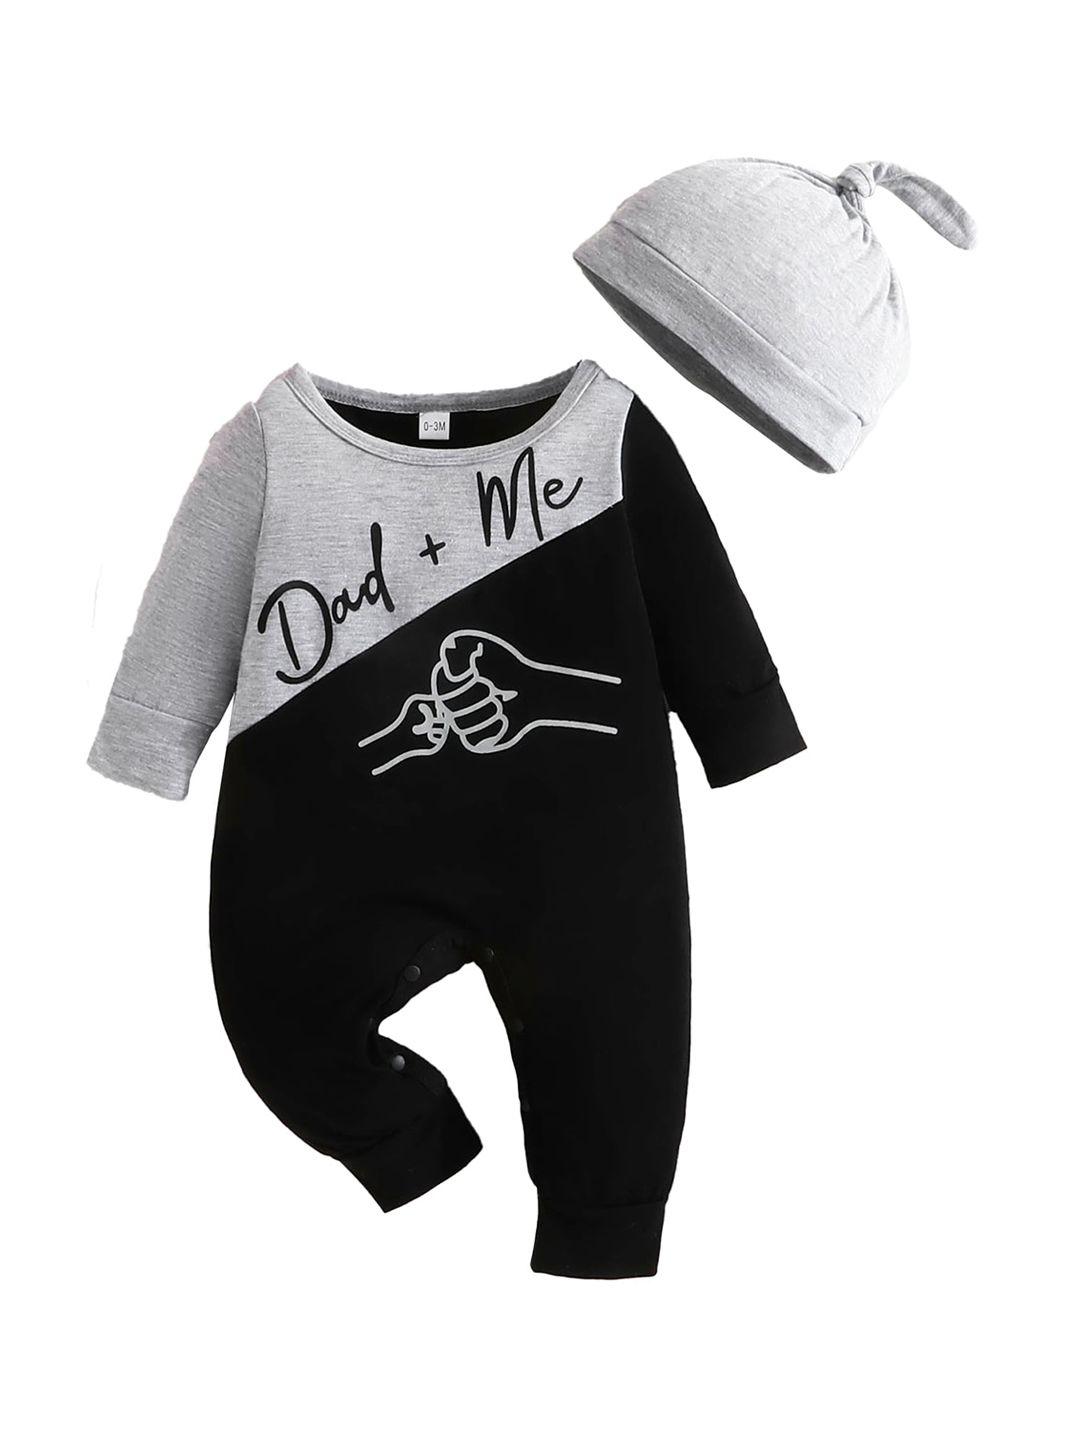 StyleCast Infants  Grey & Black Printed Rompers